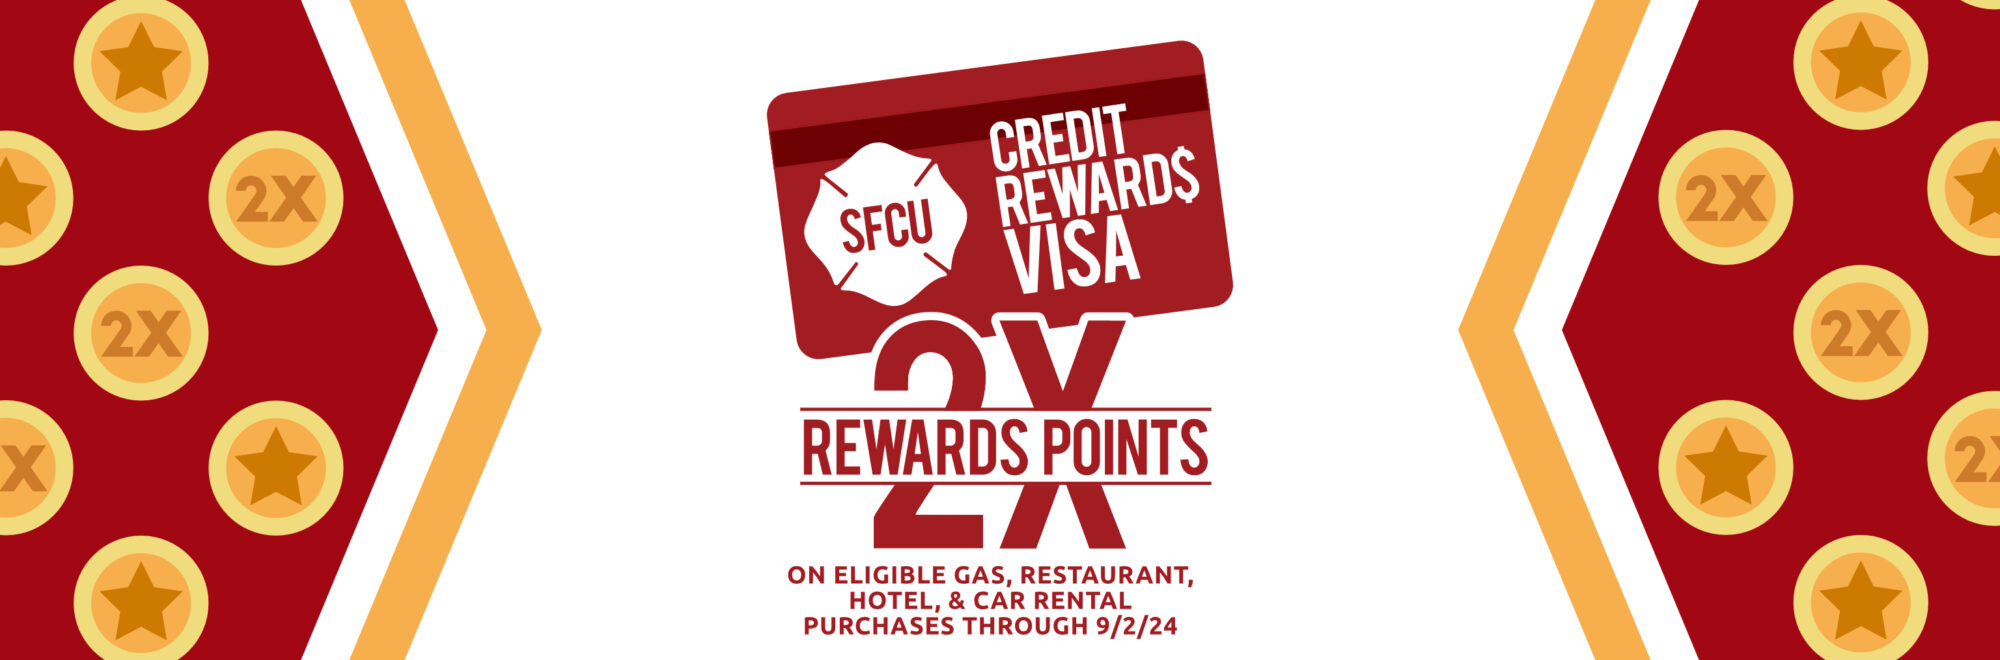 Summer 2024 SFCU Credit Rewards Visa 2X Rewards Points